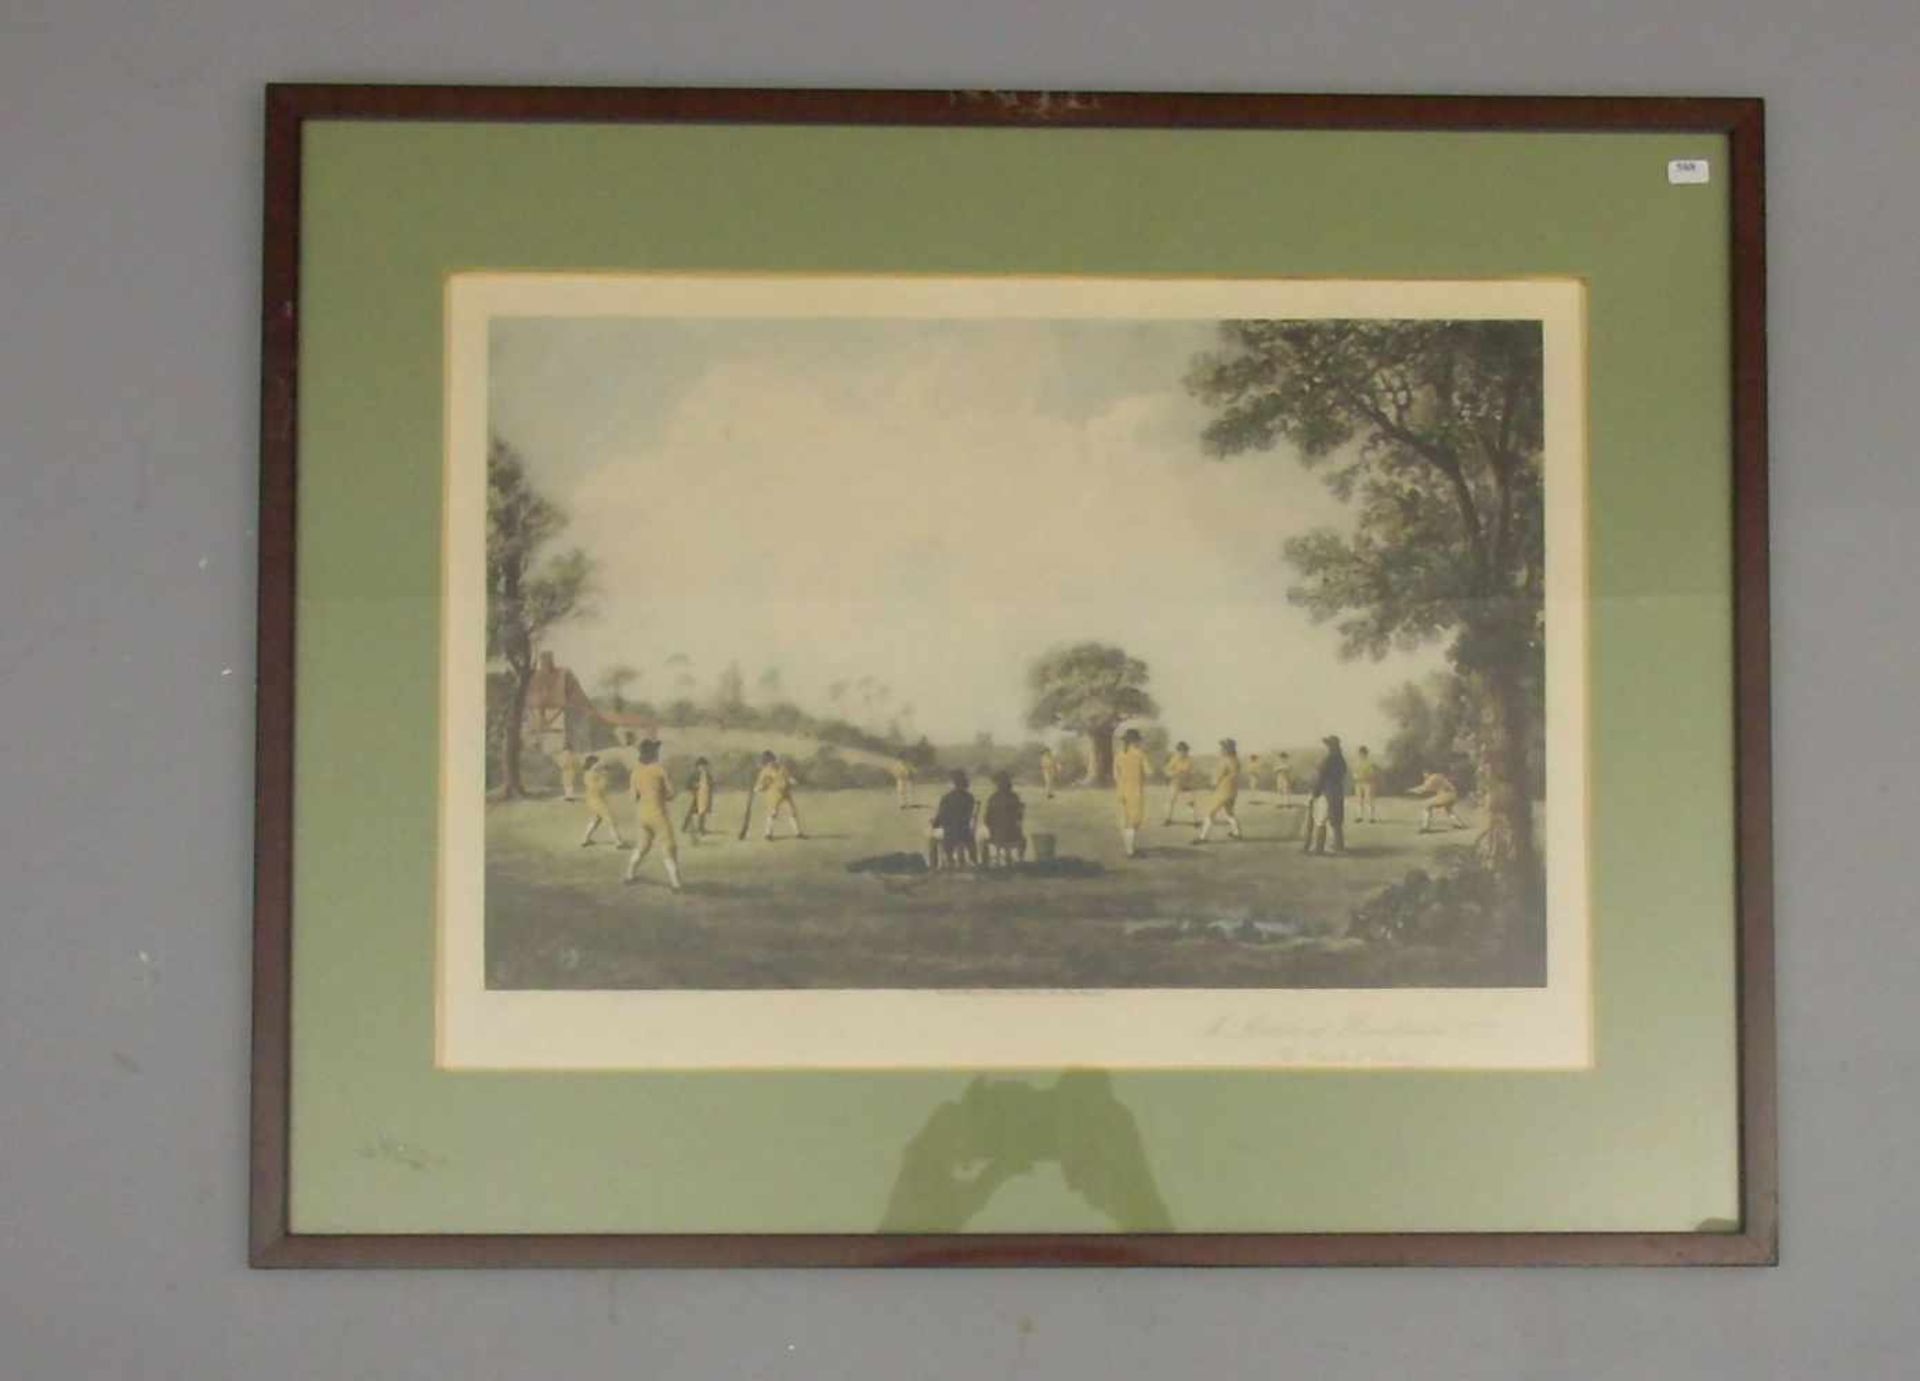 GRAFIK ZUM KRICKET-SPIEL: "A MATCH AT HAMBLEDON 1777 ("The Craddle of Cricket"), Farbdruck, "